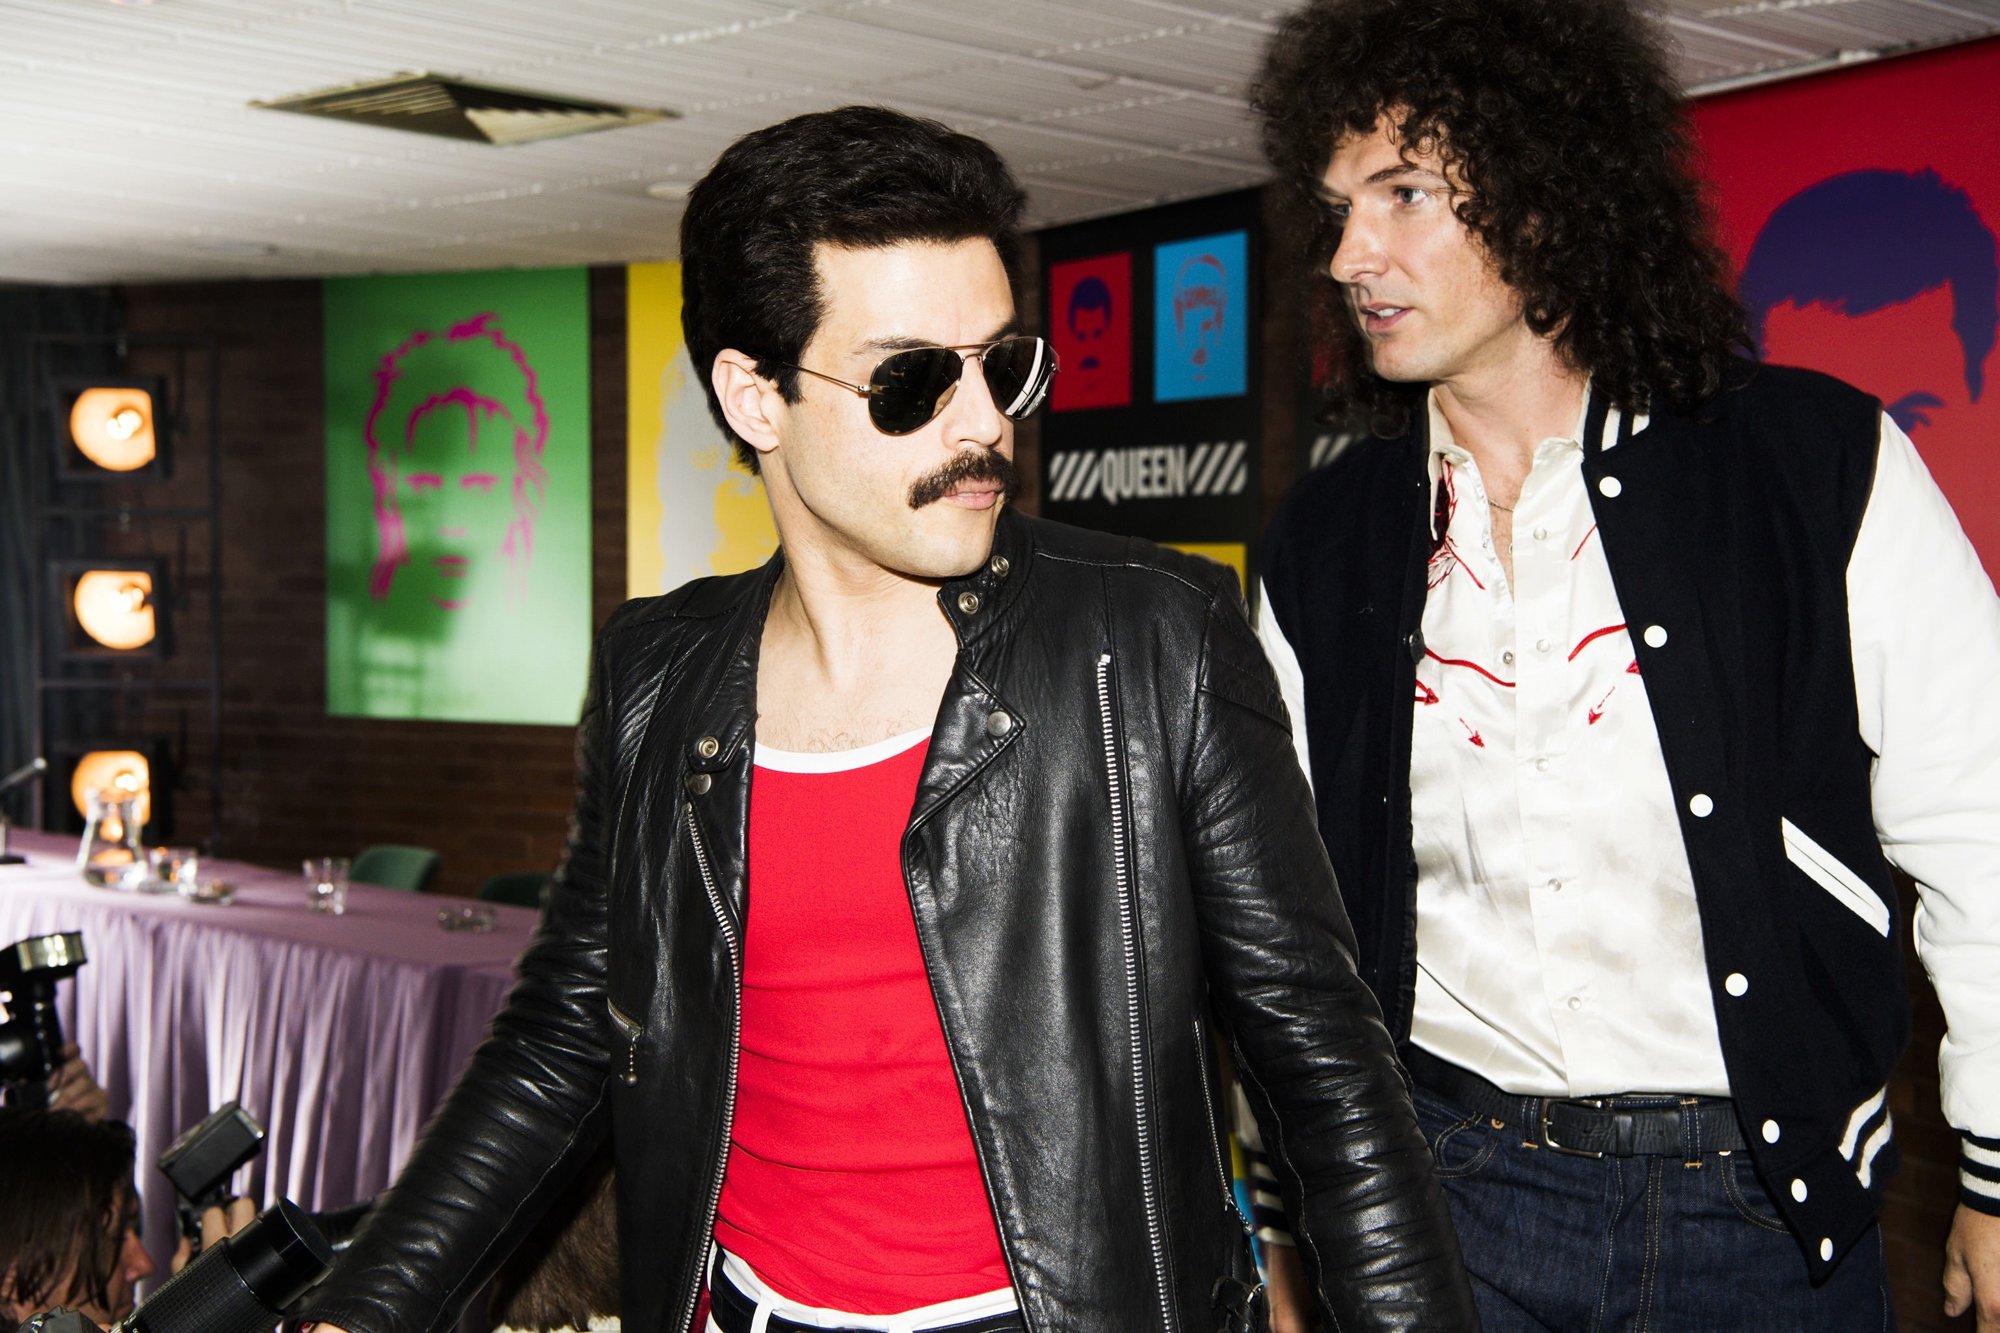 Bohemian Rhapsody download the new